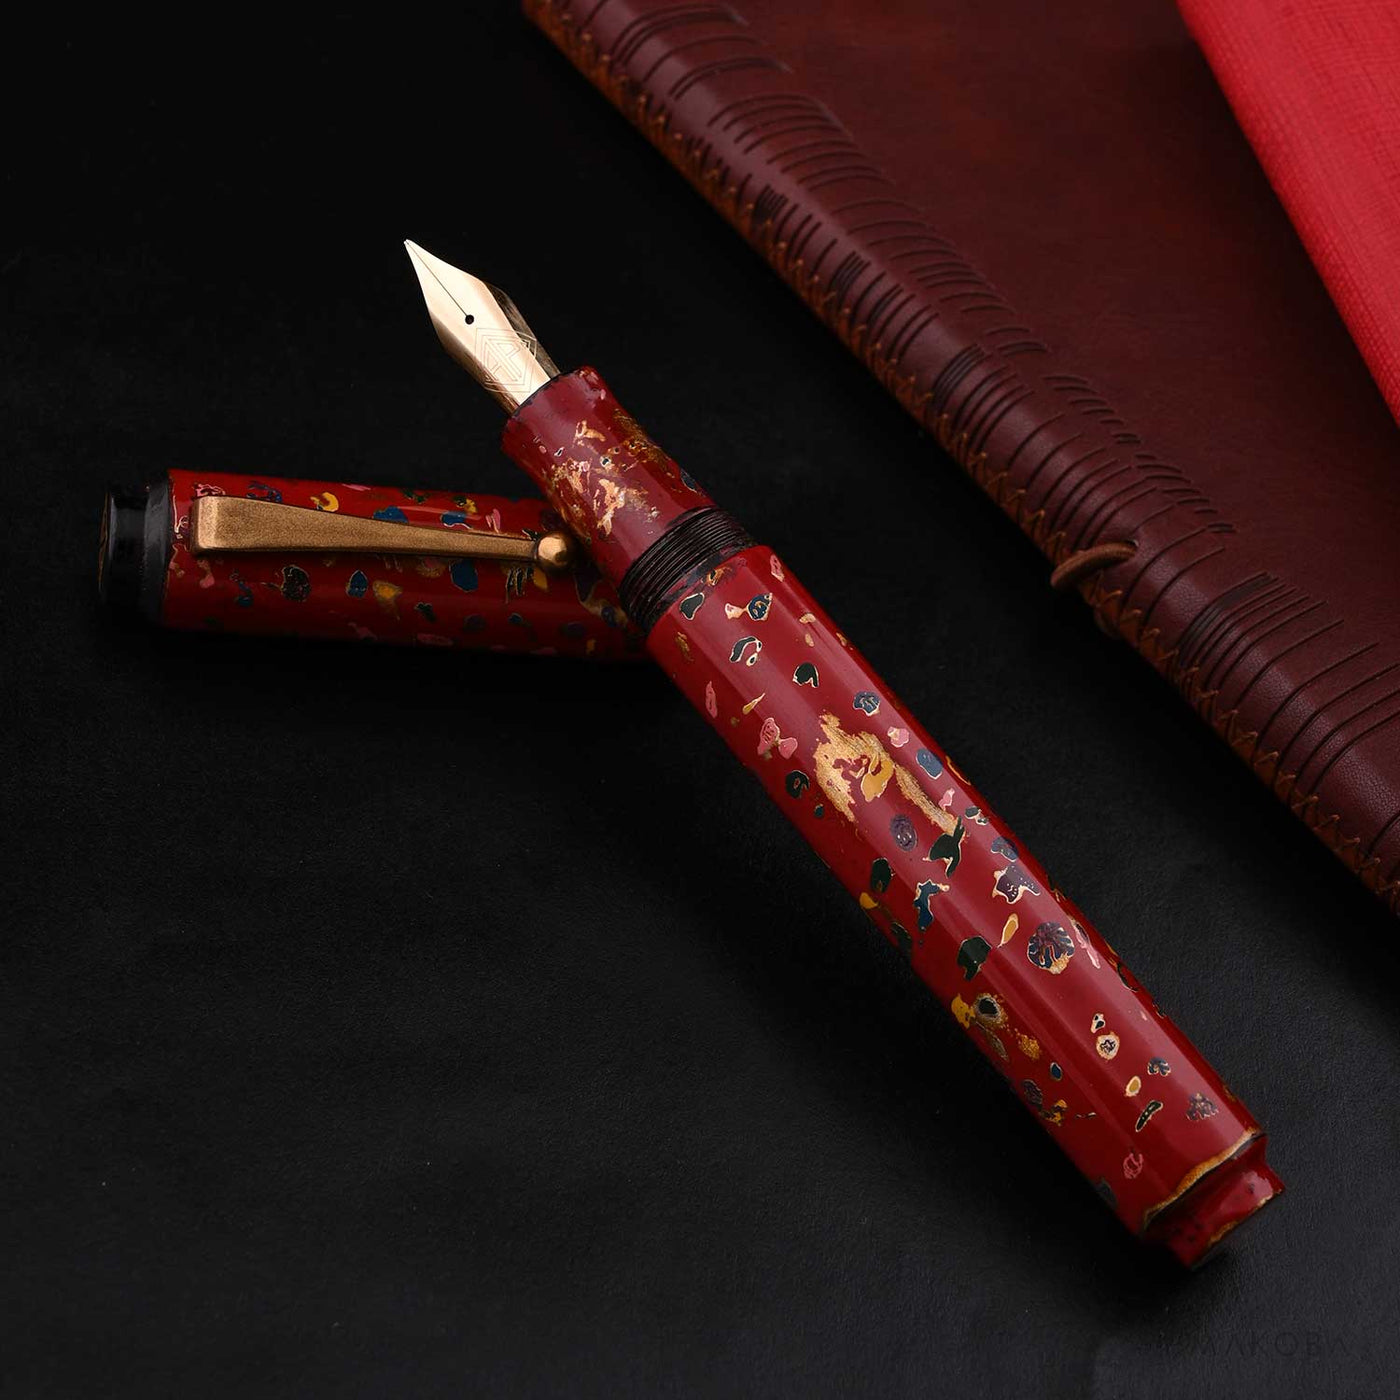 AP Magical Nuri Limited Edition Fountain Pen Red 18K Gold Nib 1